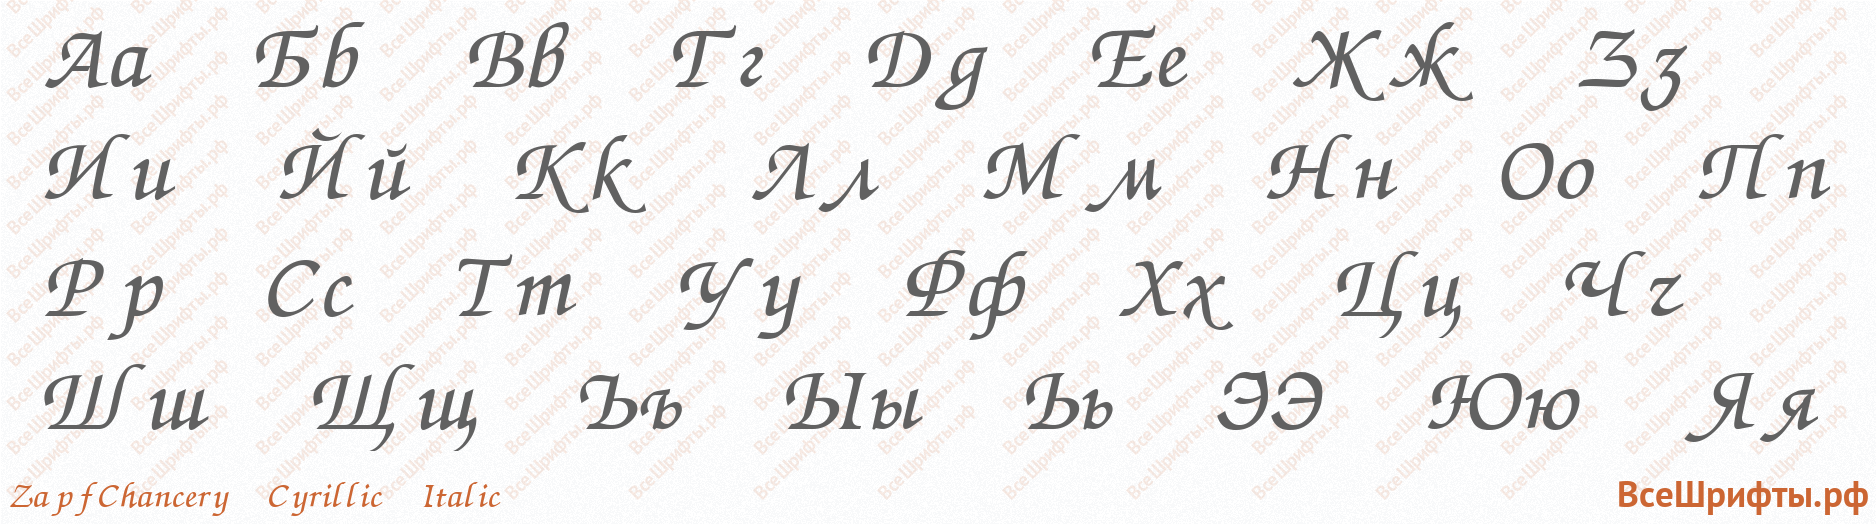 Шрифт ZapfChancery Cyrillic Italic с русскими буквами